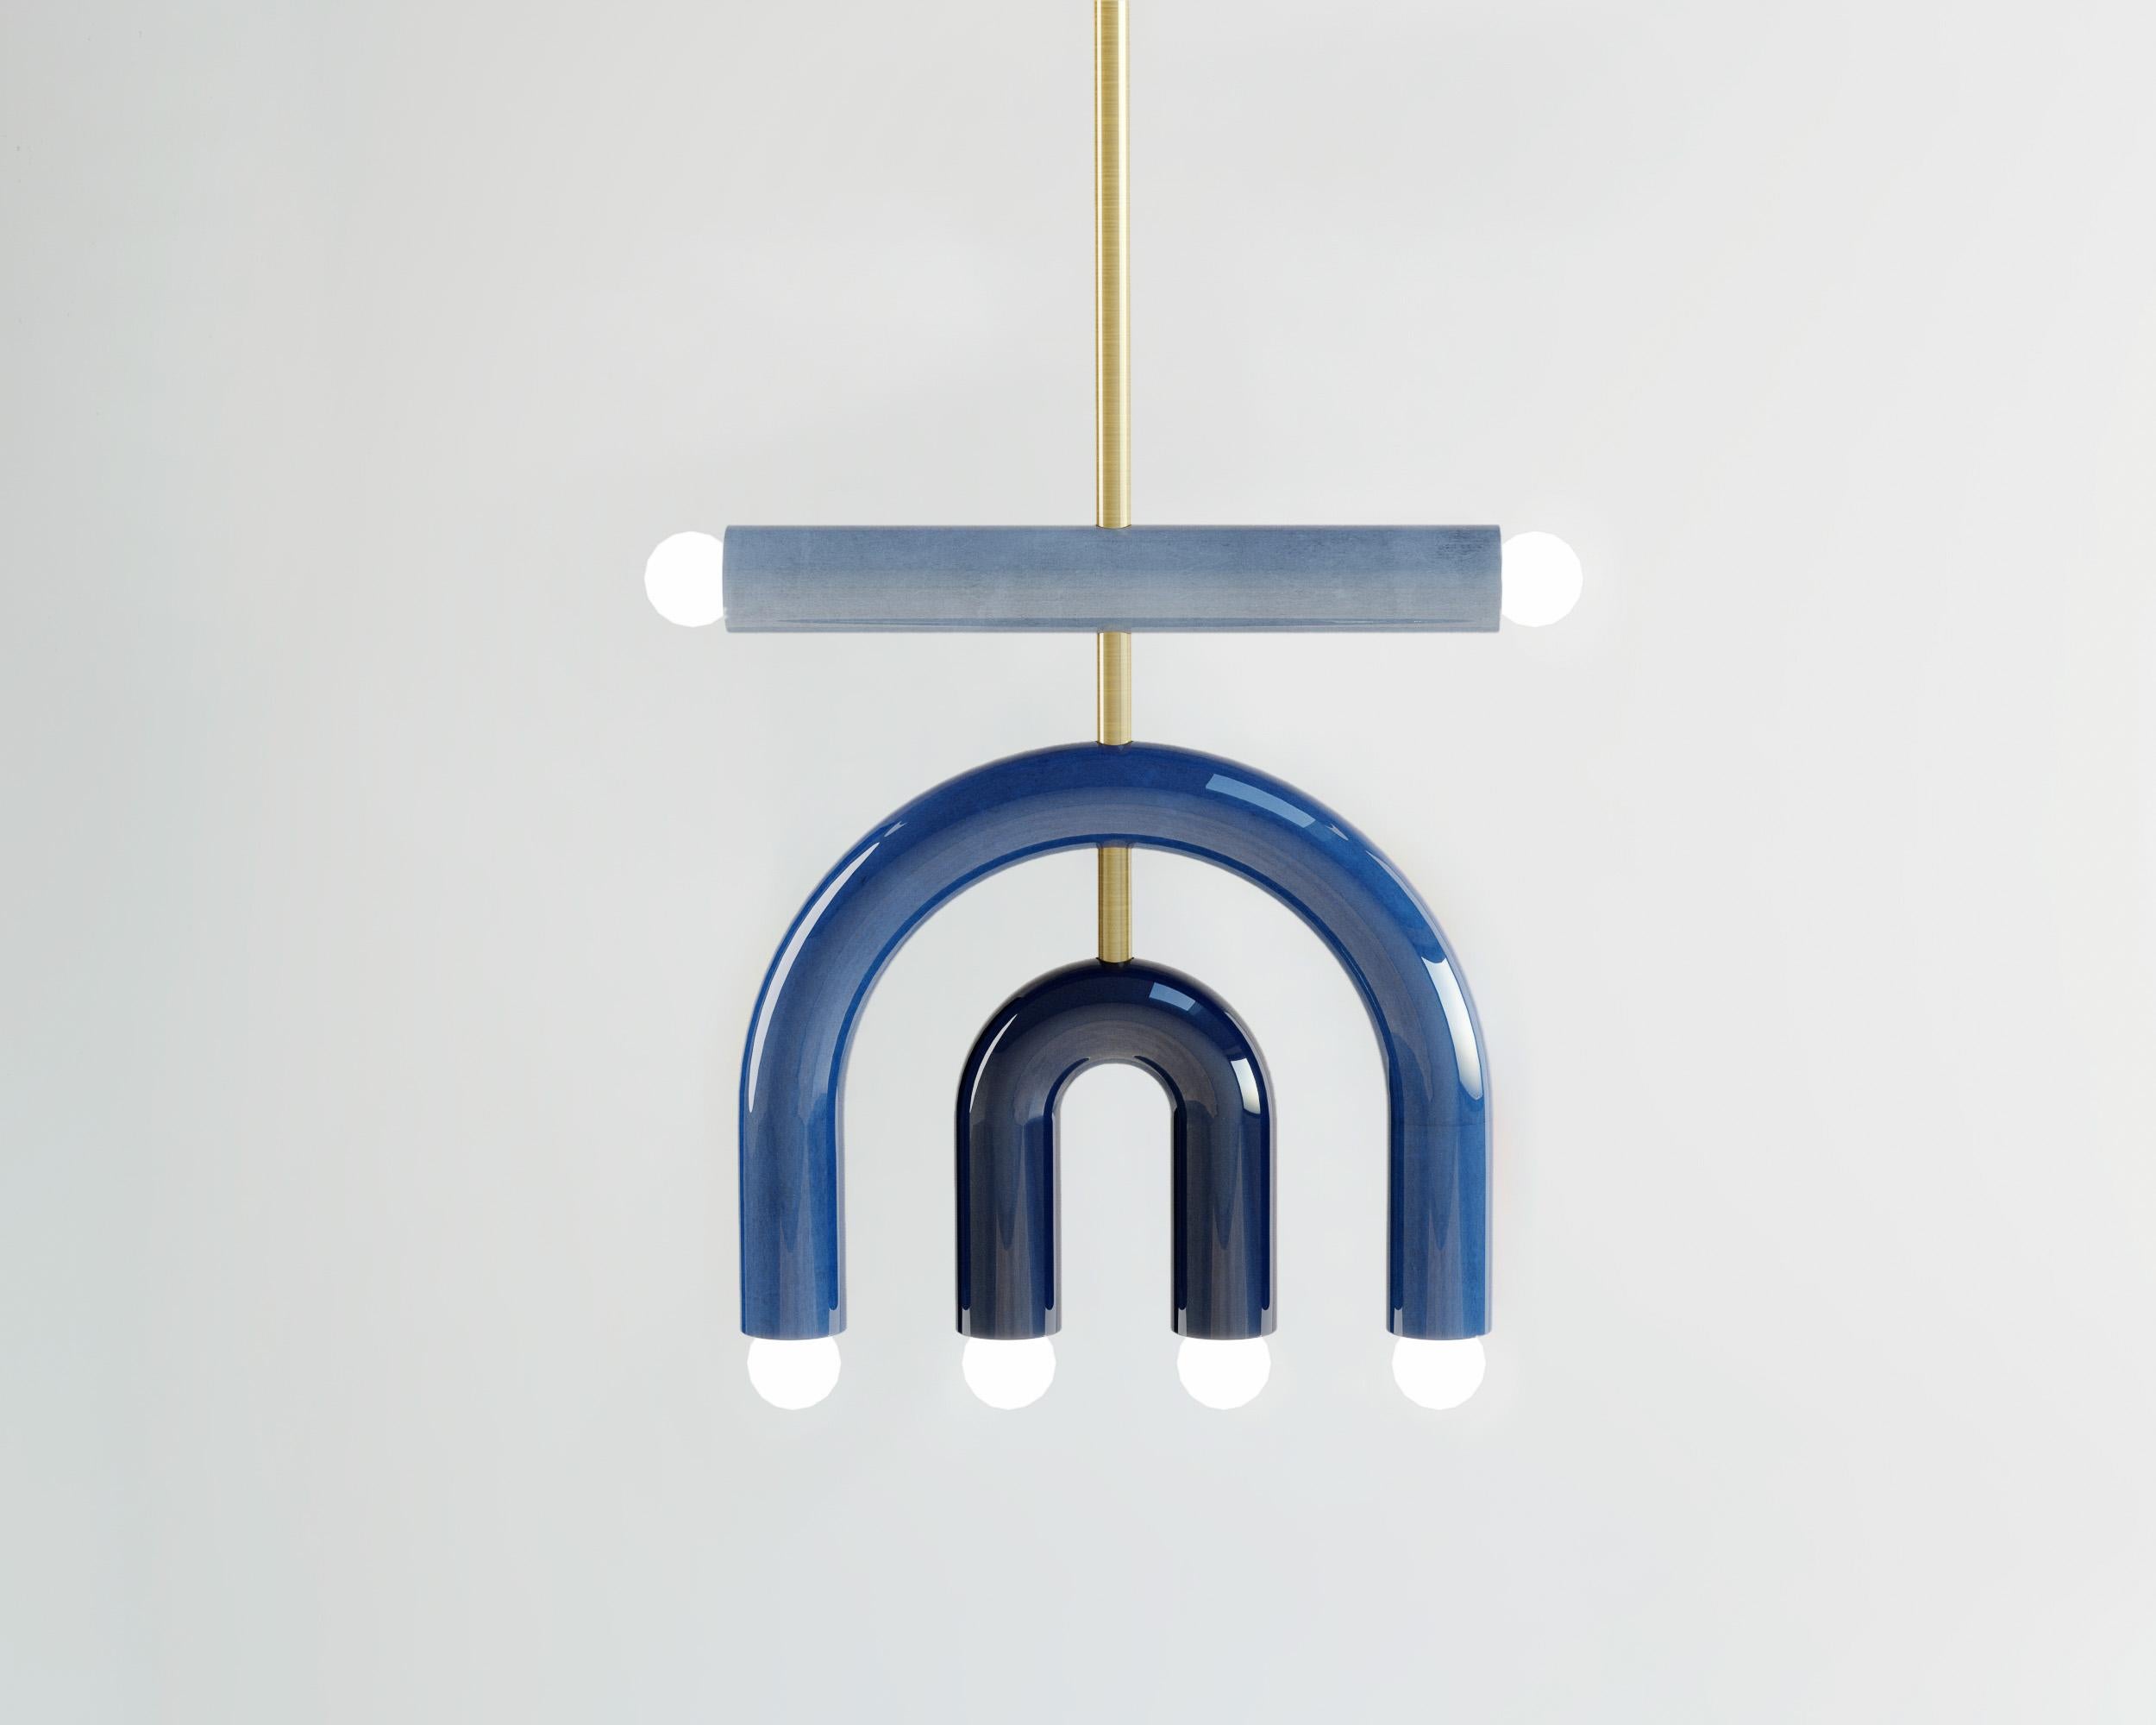 TRN D1 Pendant lamp / ceiling lamp / chandelier 
Designer: Pani Jurek

Dimensions: H37.5 x 35 x 5 cm
Model shown: Light blue, medium blue, navy blue 

Bulb (not included): E27/E26, compatible with US electric system
Bulb (not included): E27/E26,